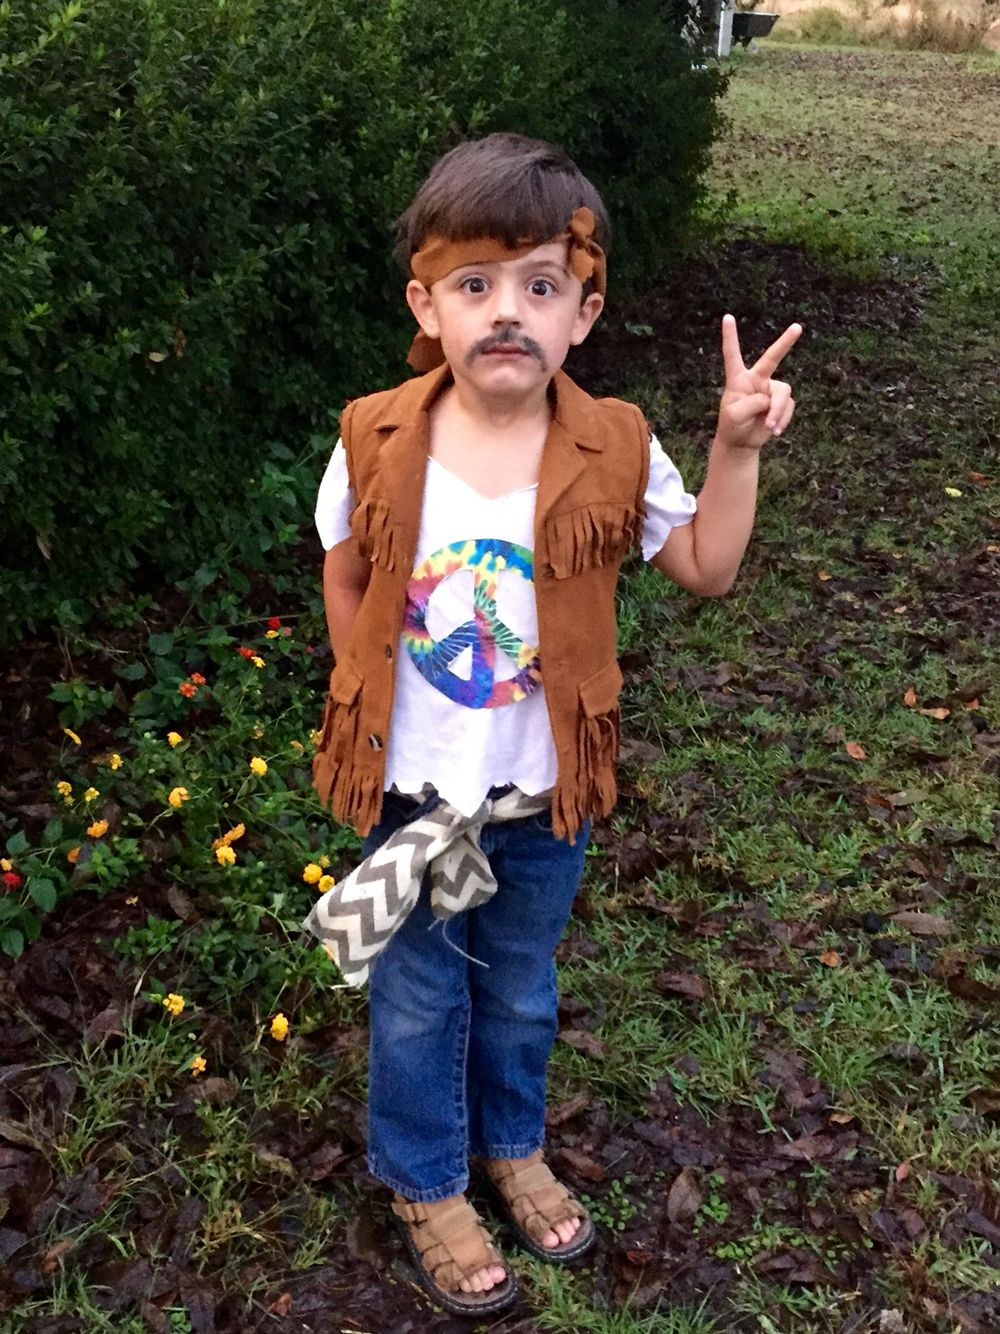 70S Dress Up Ideas For Kids
 Hippie DIY costume